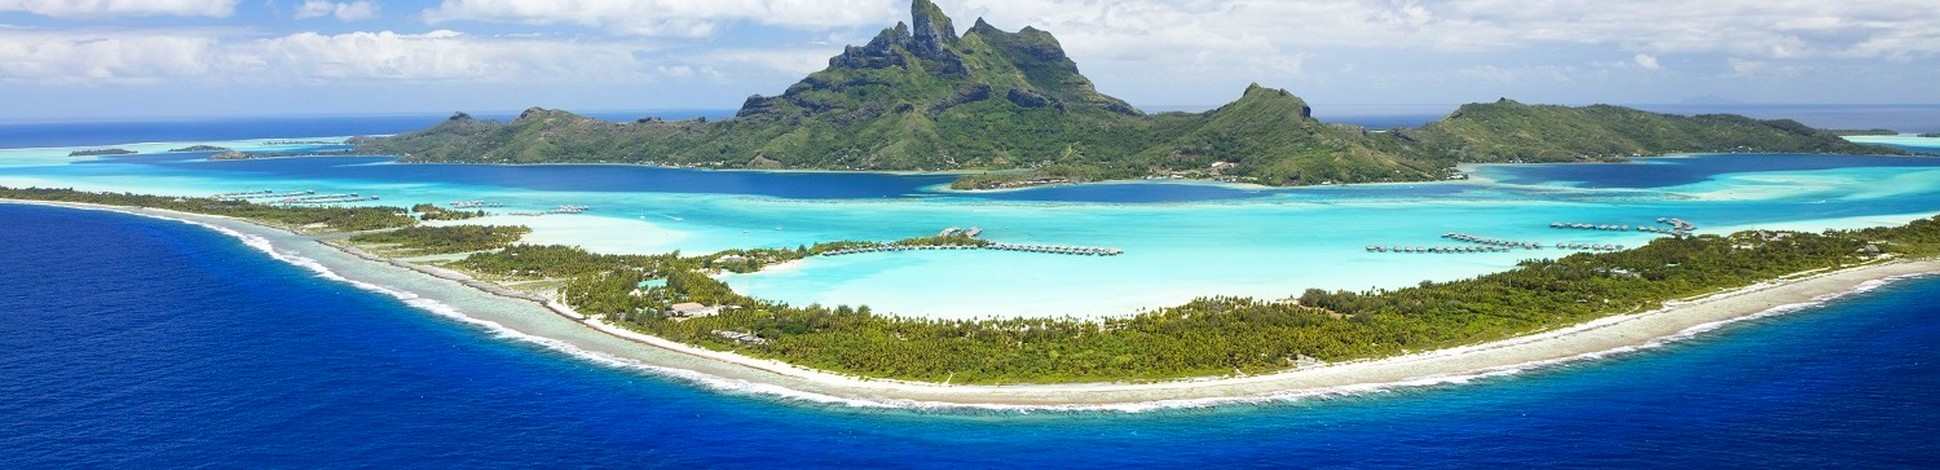 Polynésie française Tahiti Moorea Bora Bora lagon eau turquoise